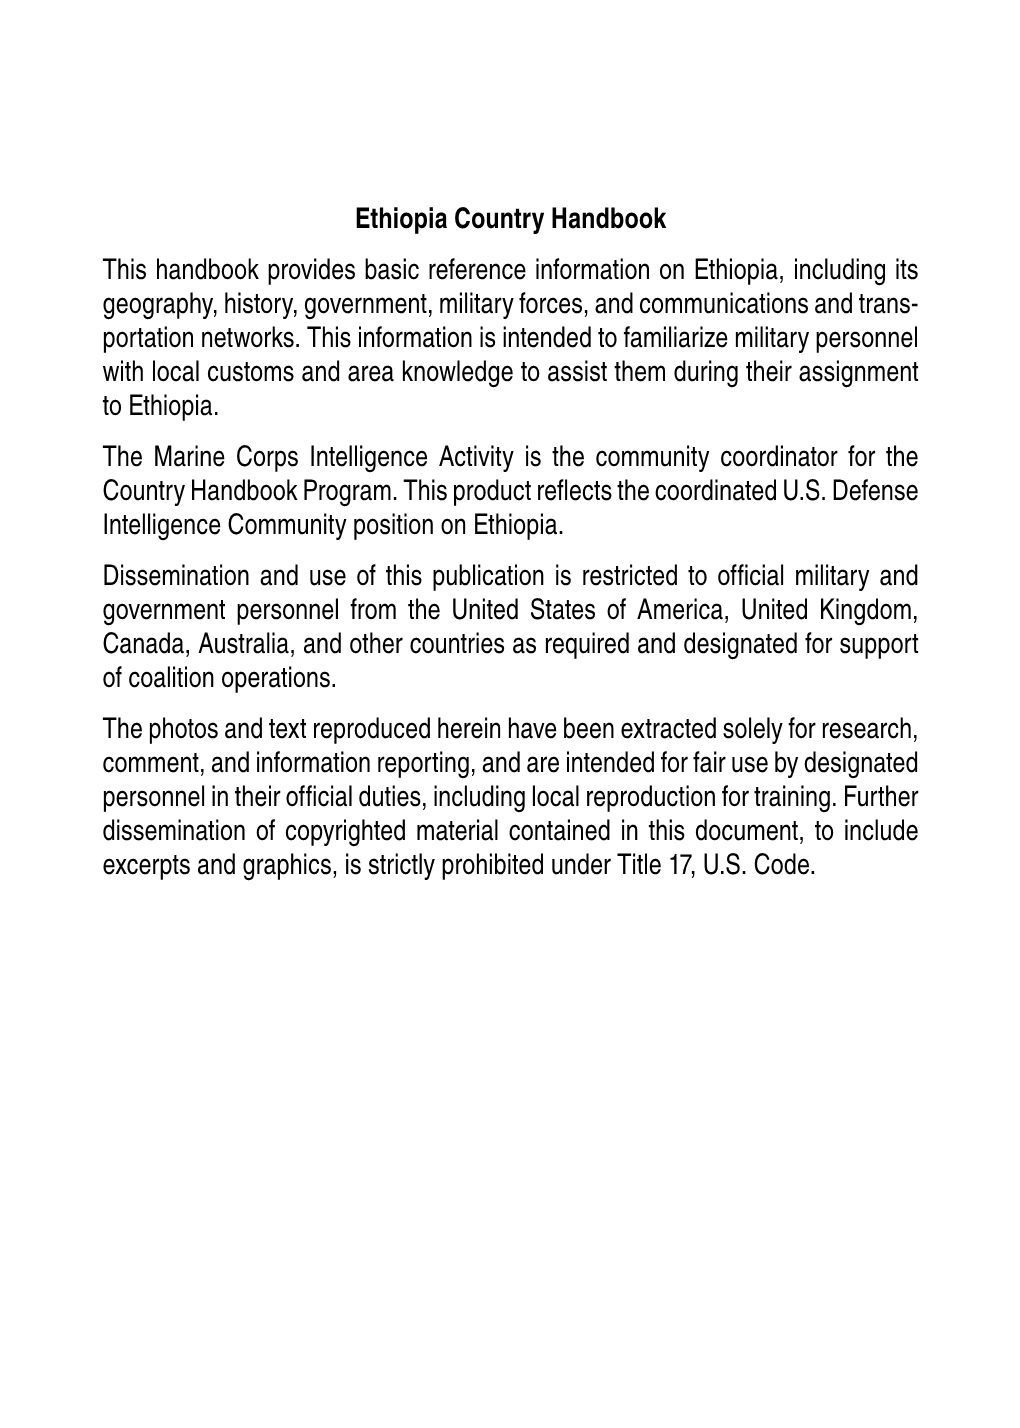 Ethiopia Country Handbook This Handbook Provides Basic Reference